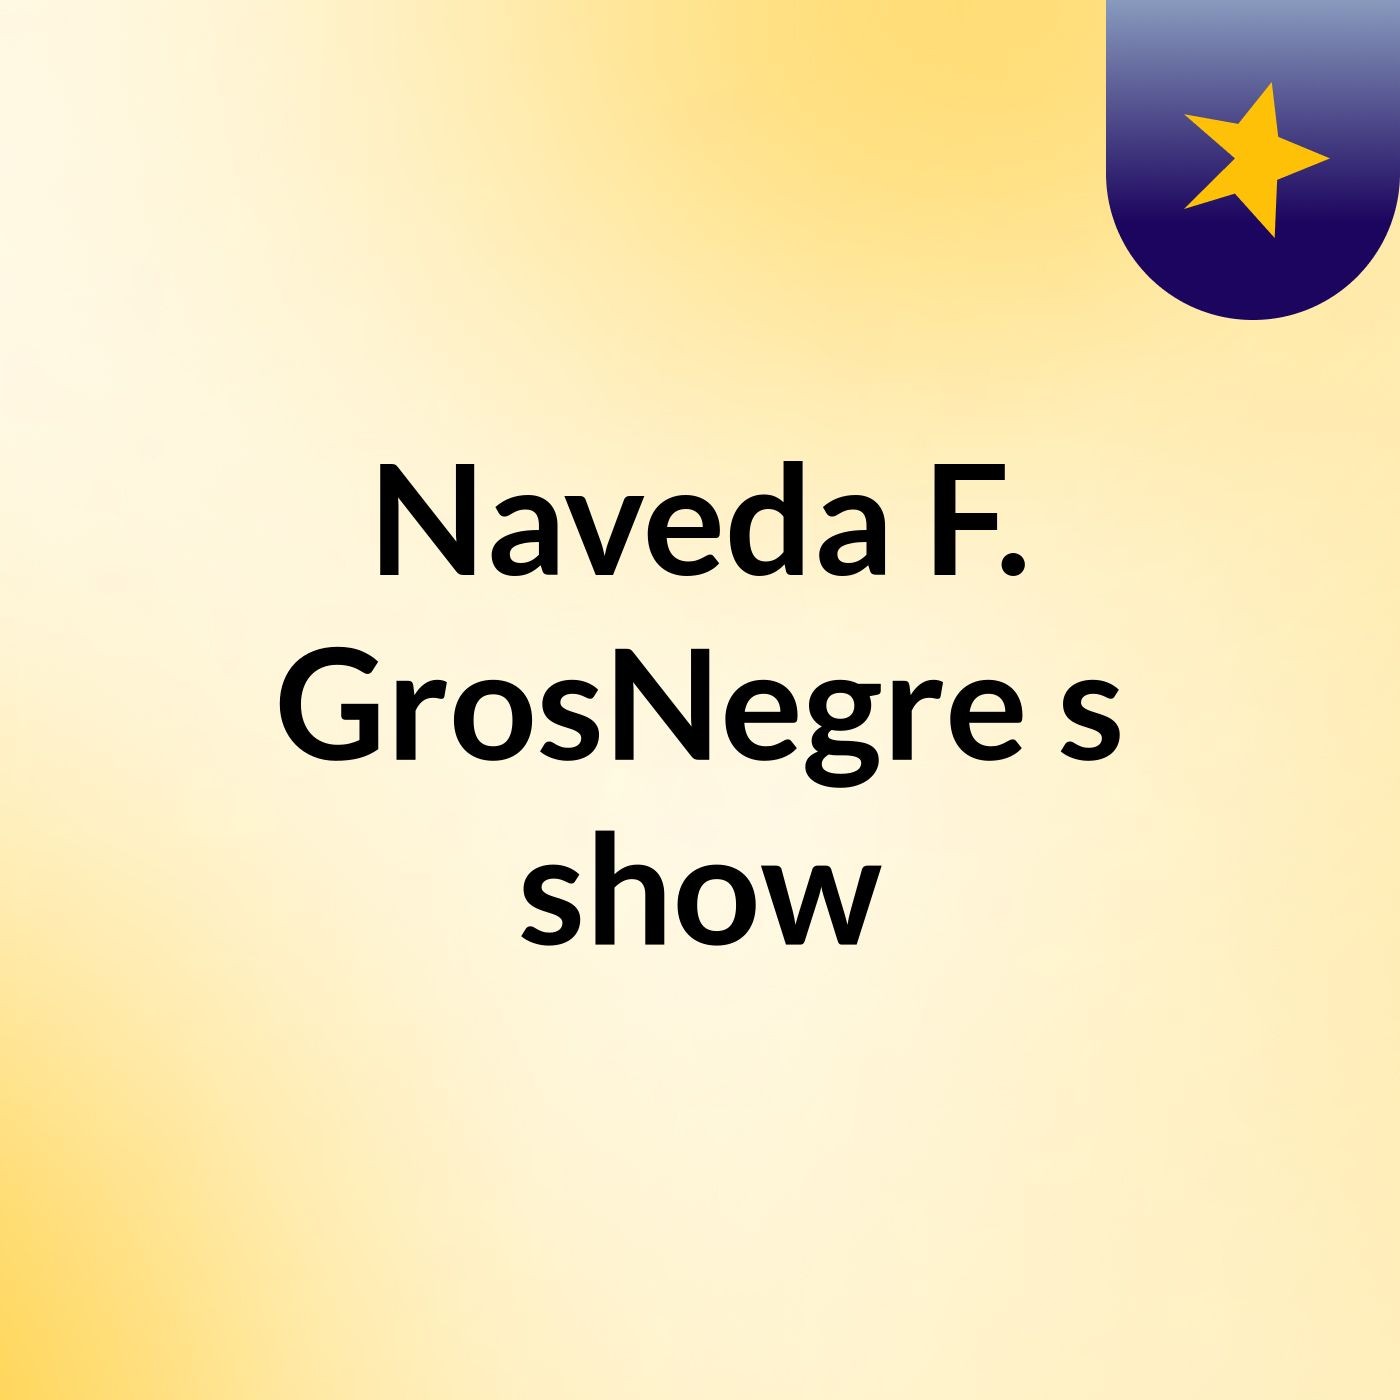 Episode 5 - Naveda F. GrosNegre's show